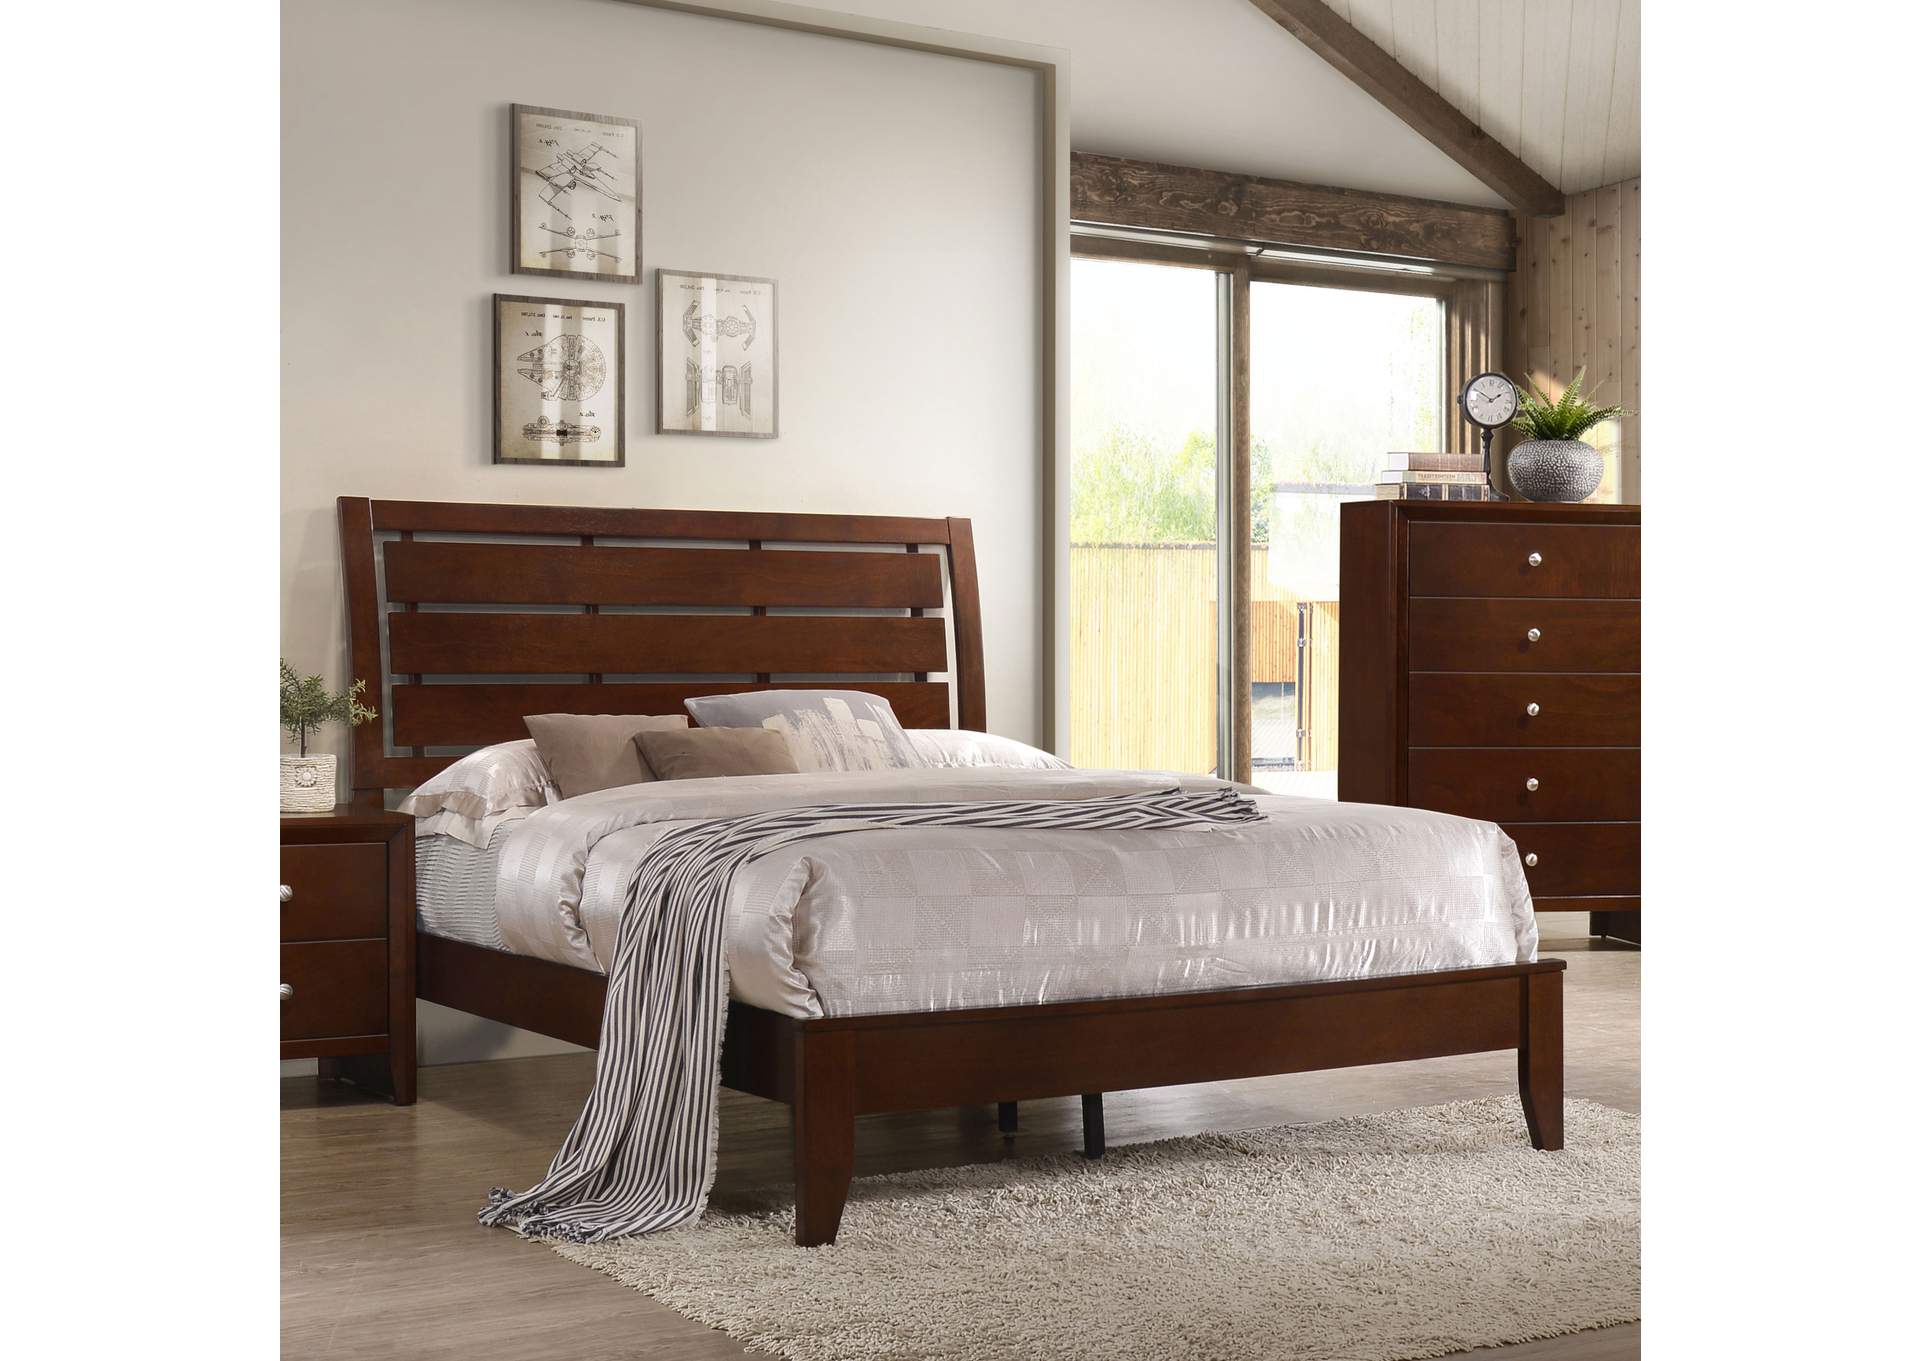 Serenity Queen Panel Bed Rich Merlot,Coaster Furniture